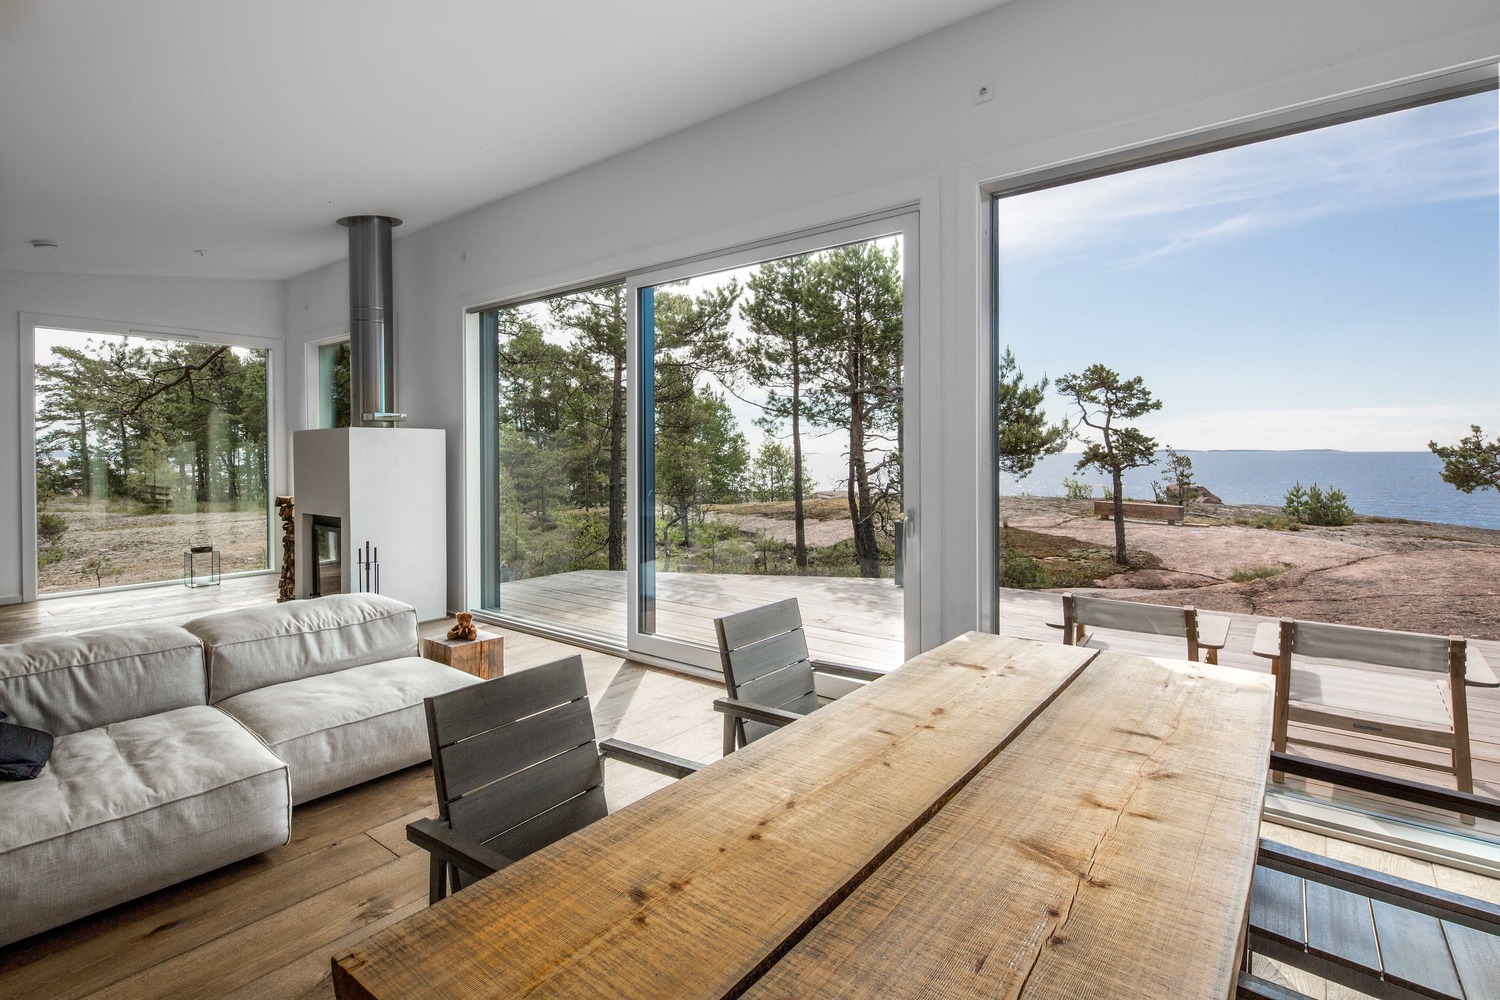 Summer House on the Baltic Sea Island  Pluspuu Oy